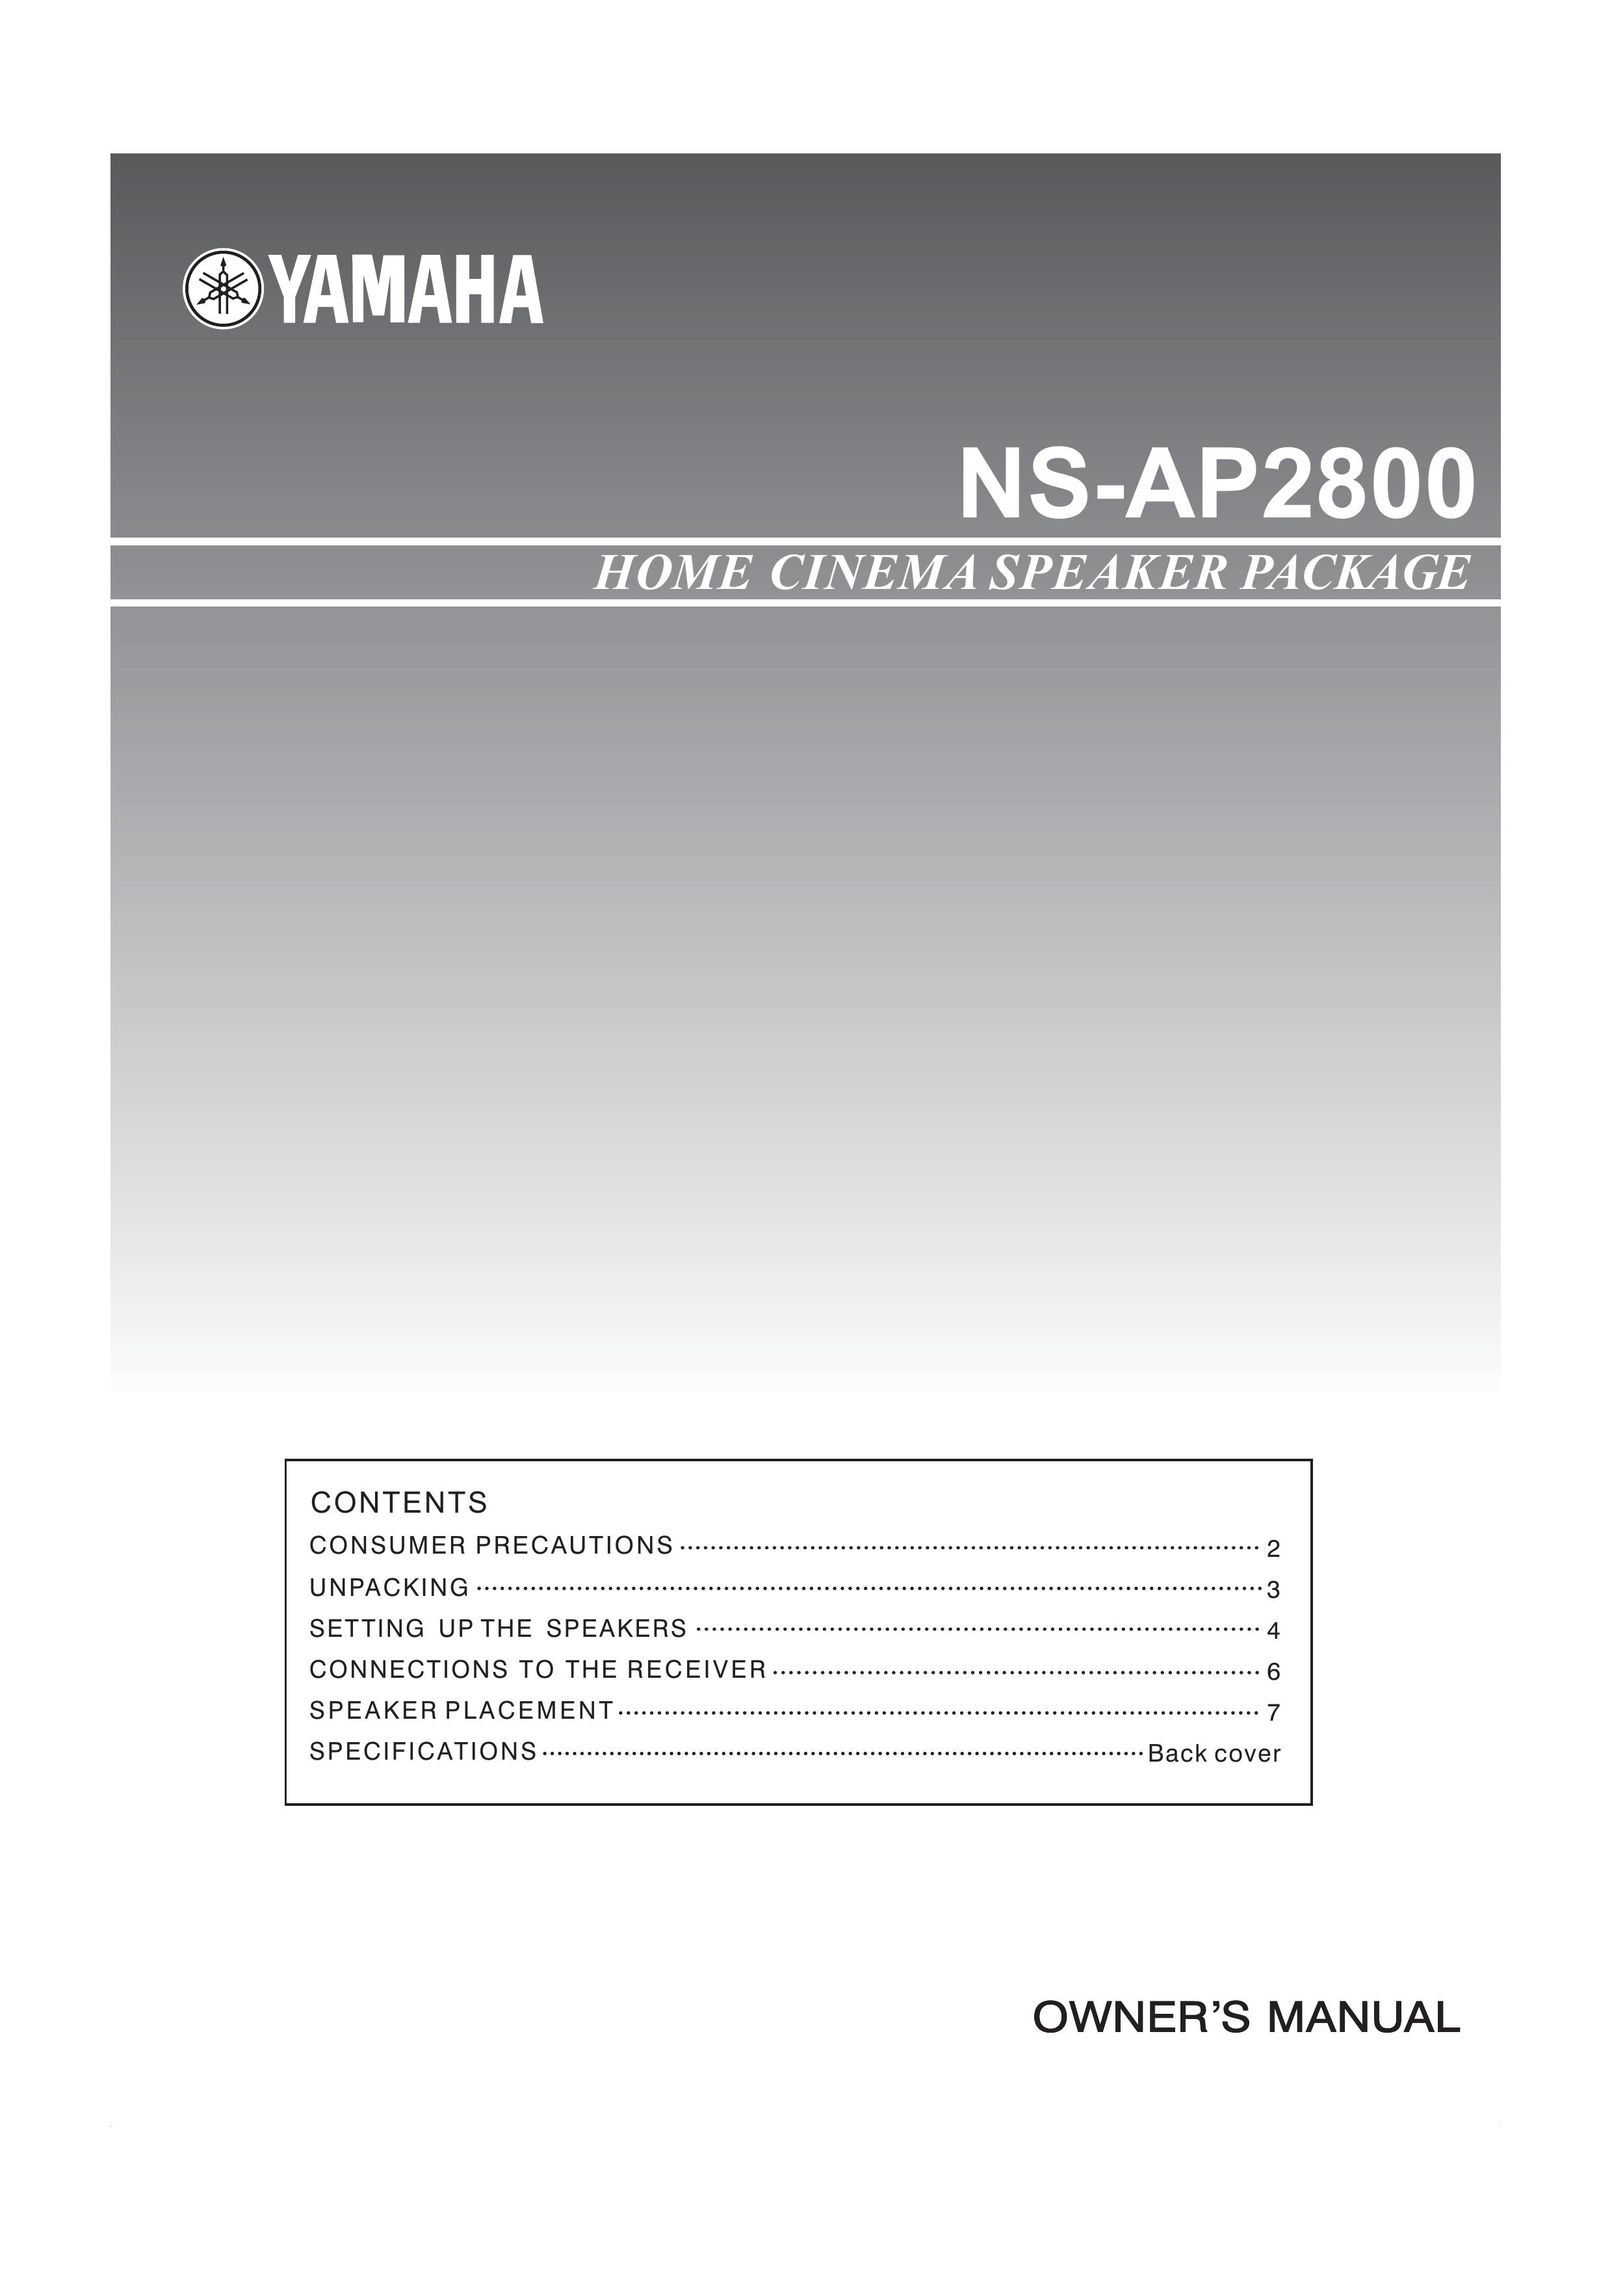 Yamaha NS-AP2800 Home Theater System User Manual